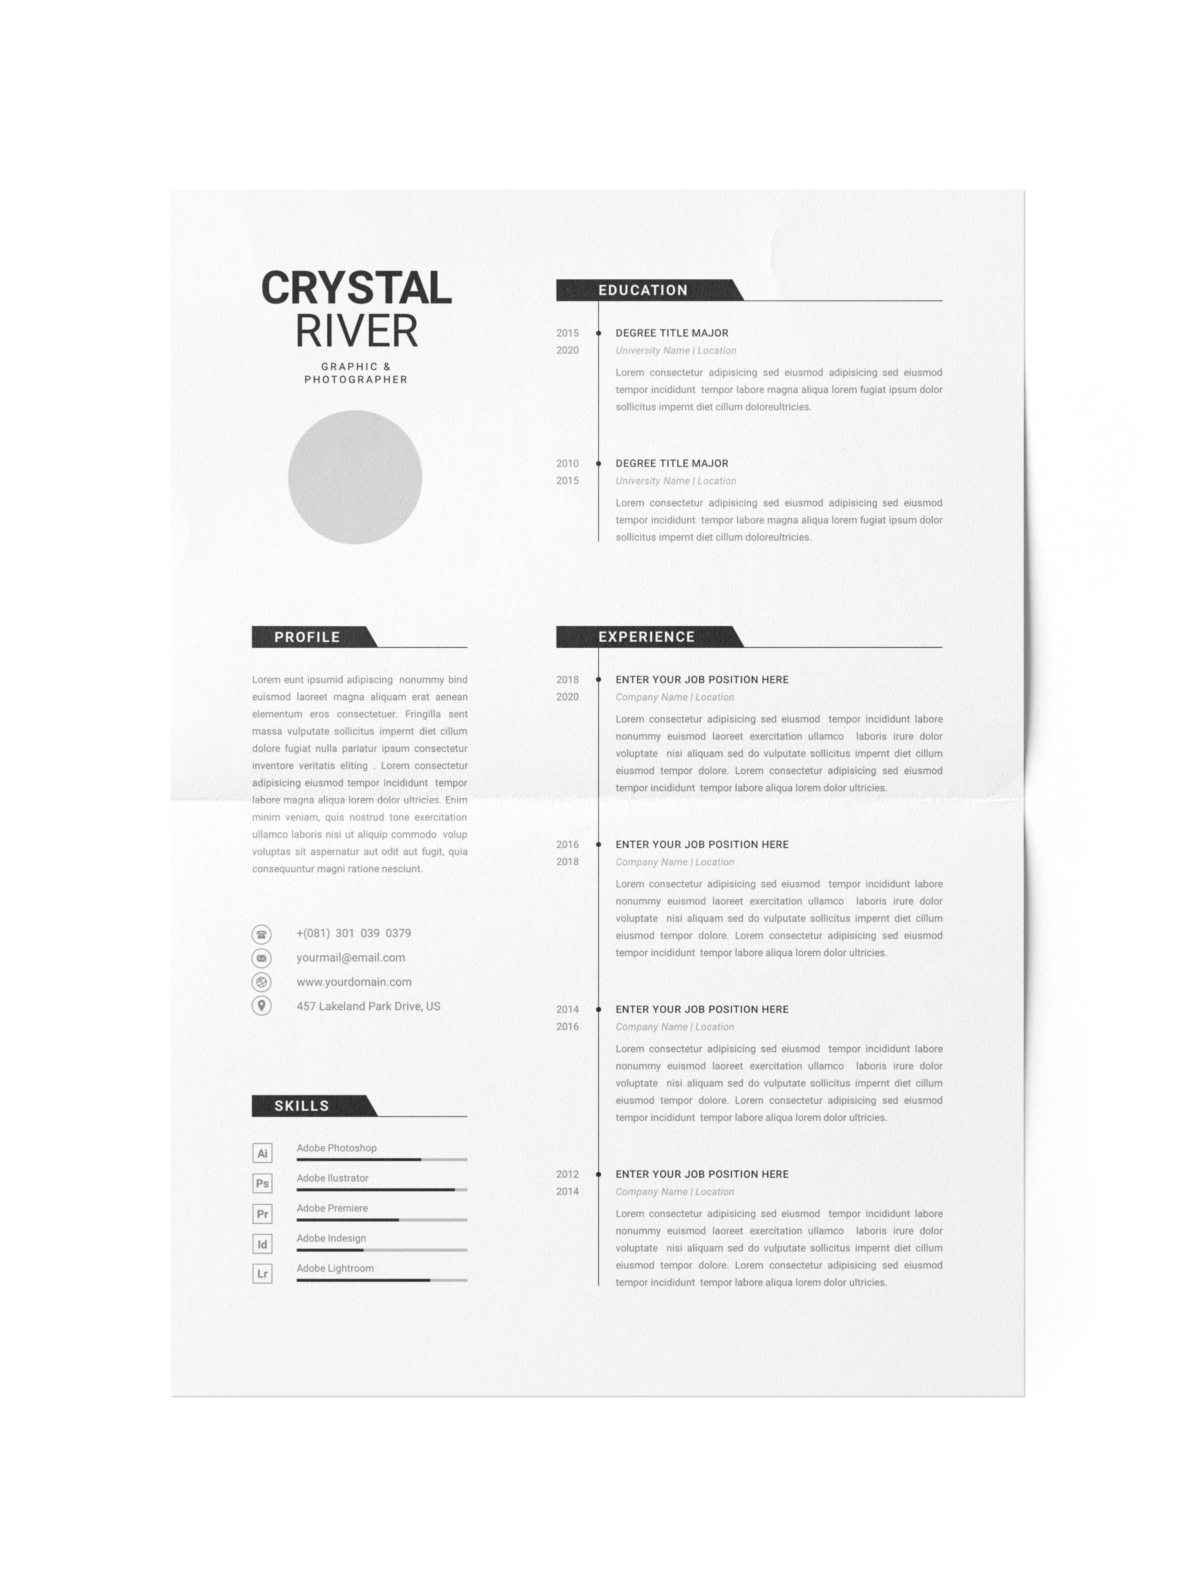 CV #68 Crystal River bis